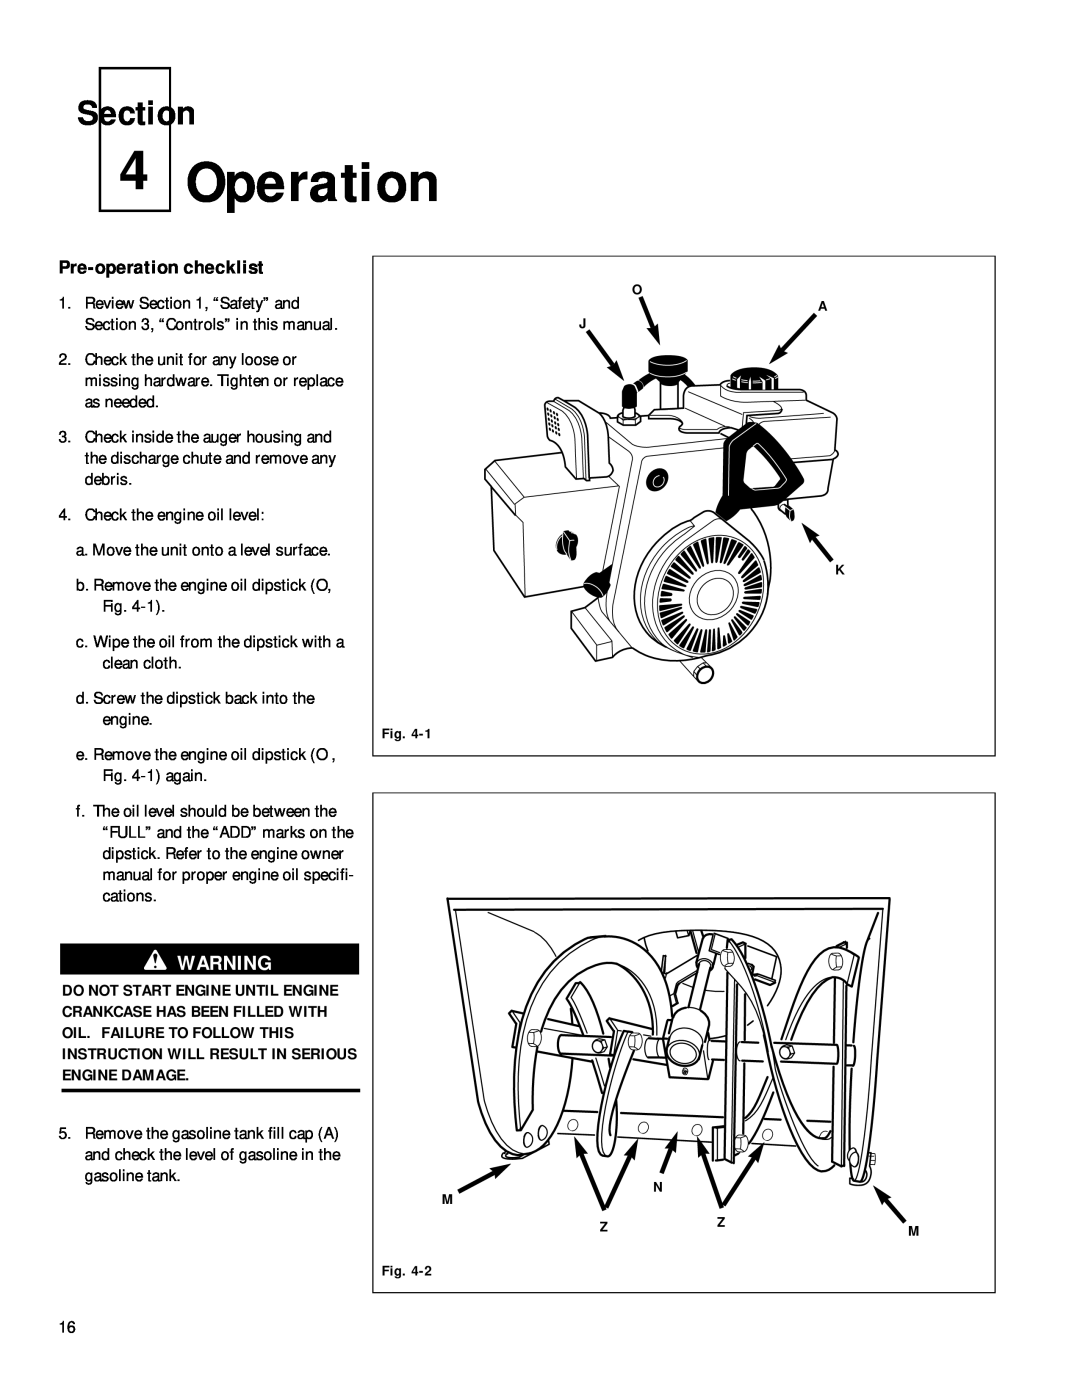 Troy-Bilt 42031, 42012, 42010, 42030 manual Operation, Pre-operation checklist, Section, Engine Damage 